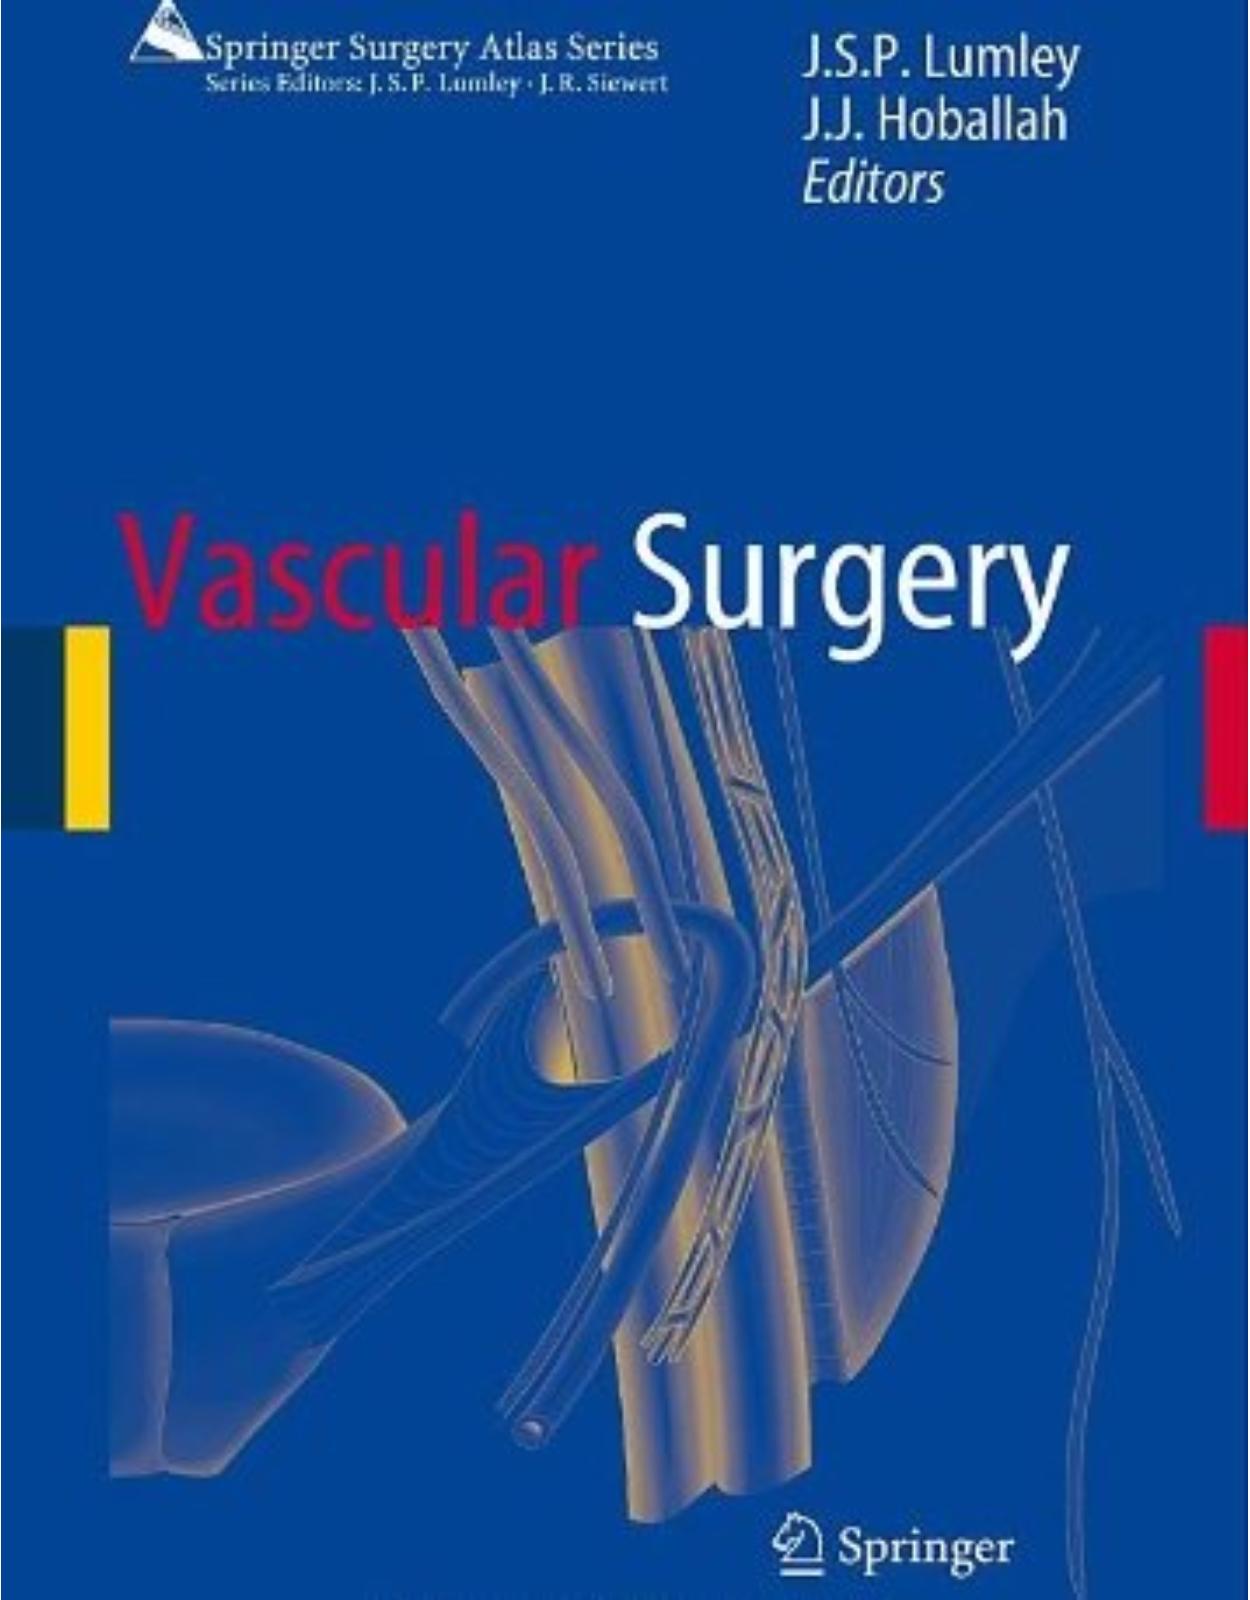 Vascular Surgery (Springer Surgery Atlas Series)